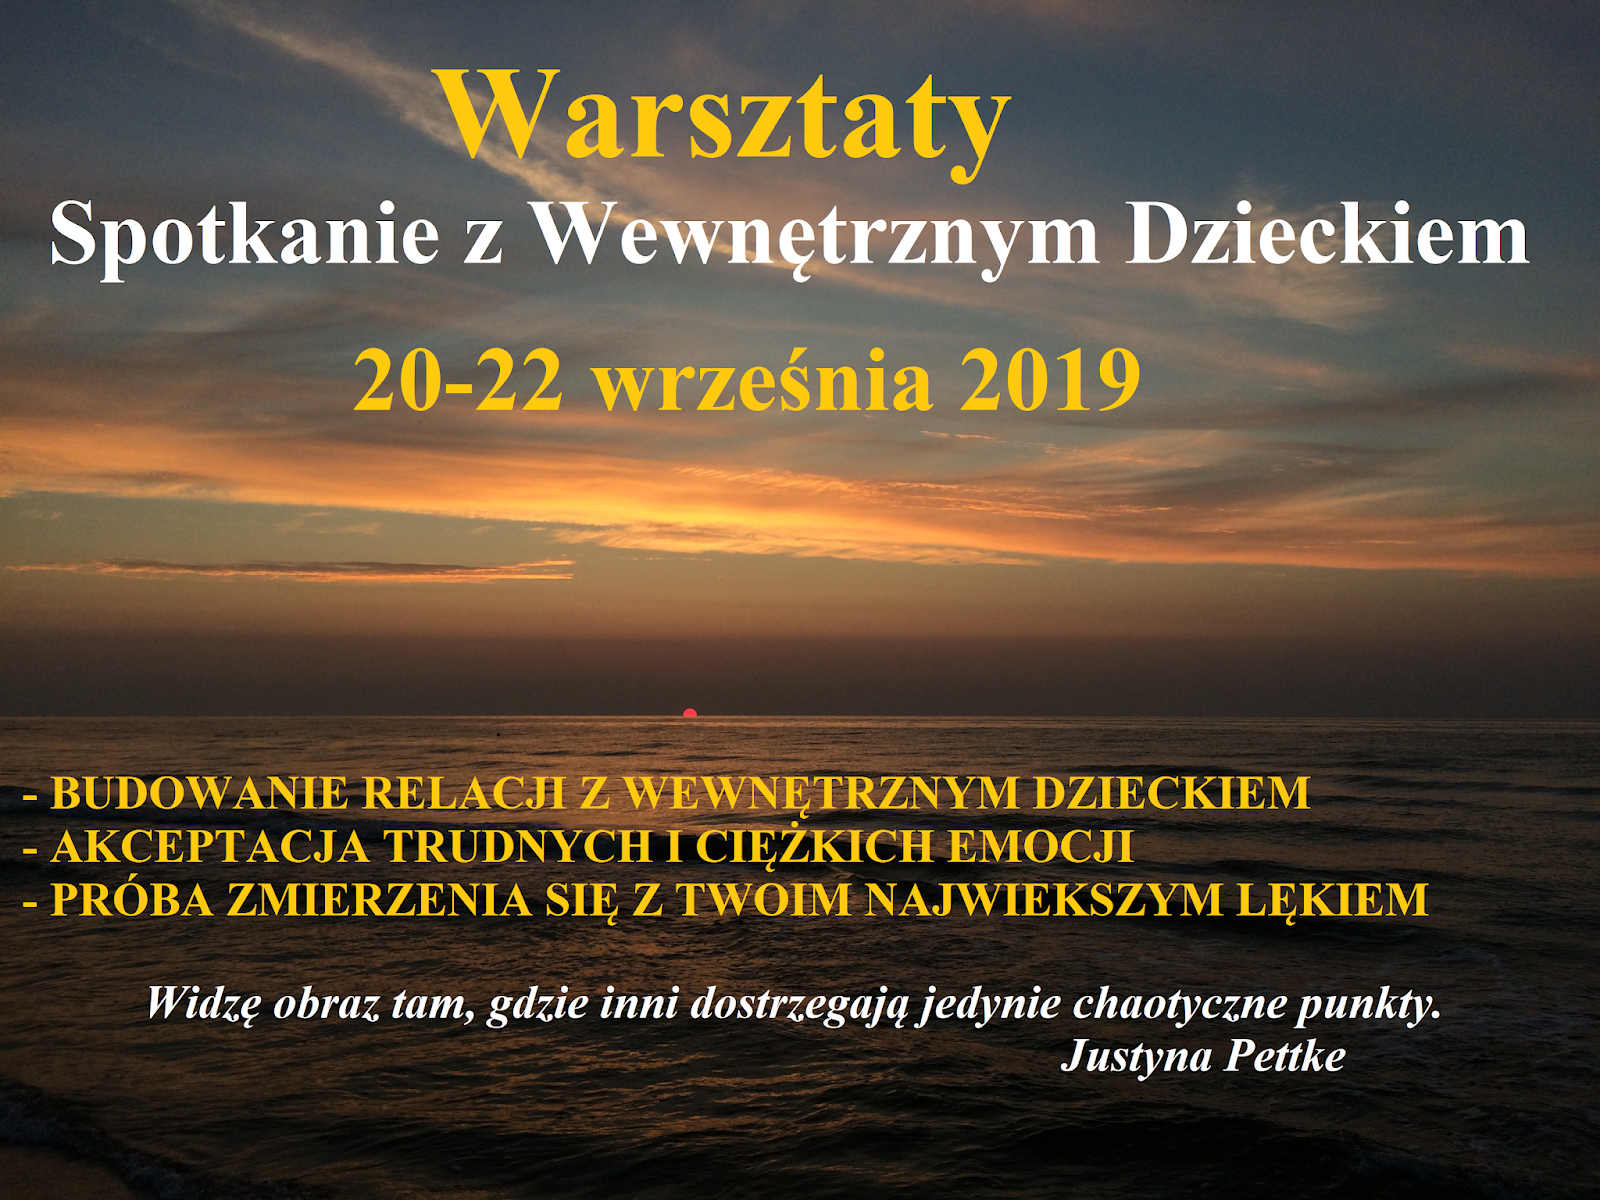 You are currently viewing Warsztaty 20-22 września 2019